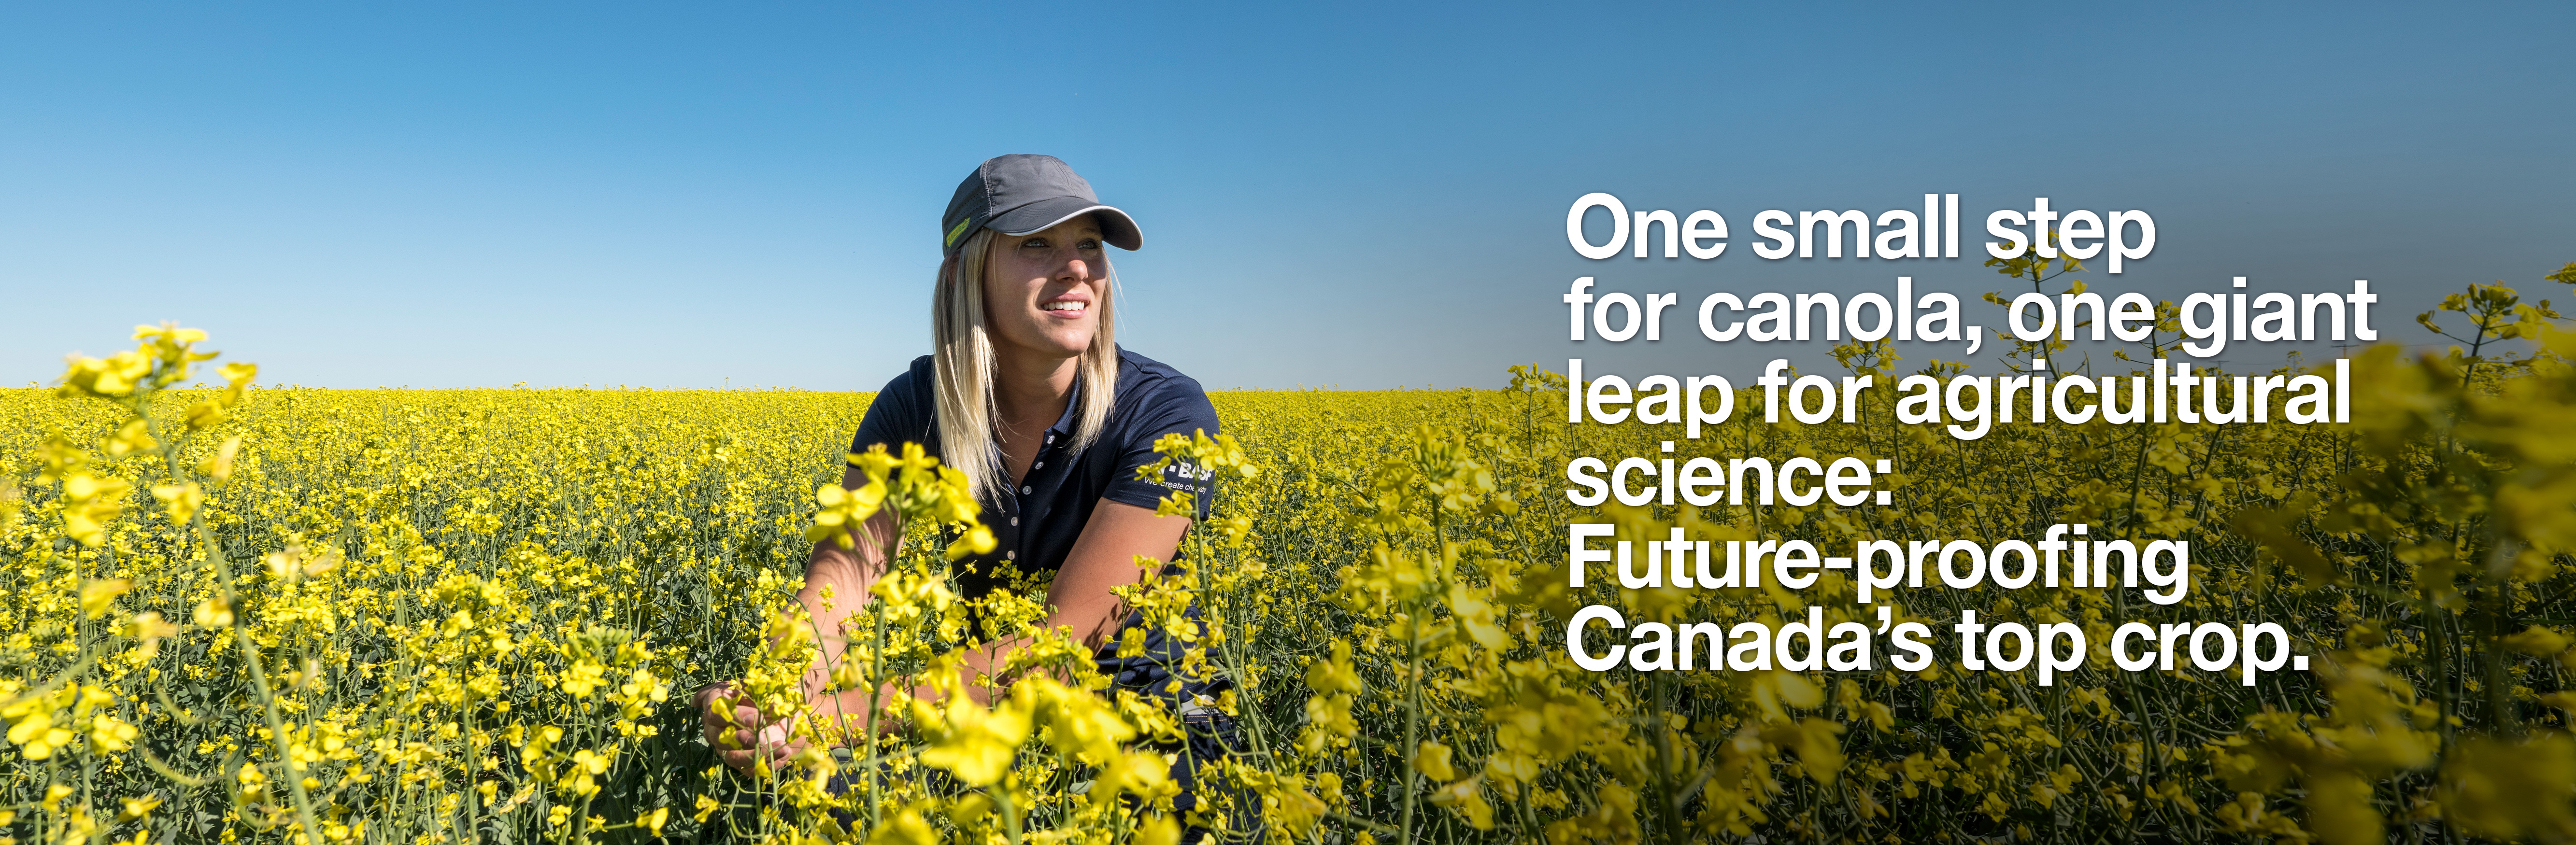 Future-proofing Canada's top crop.